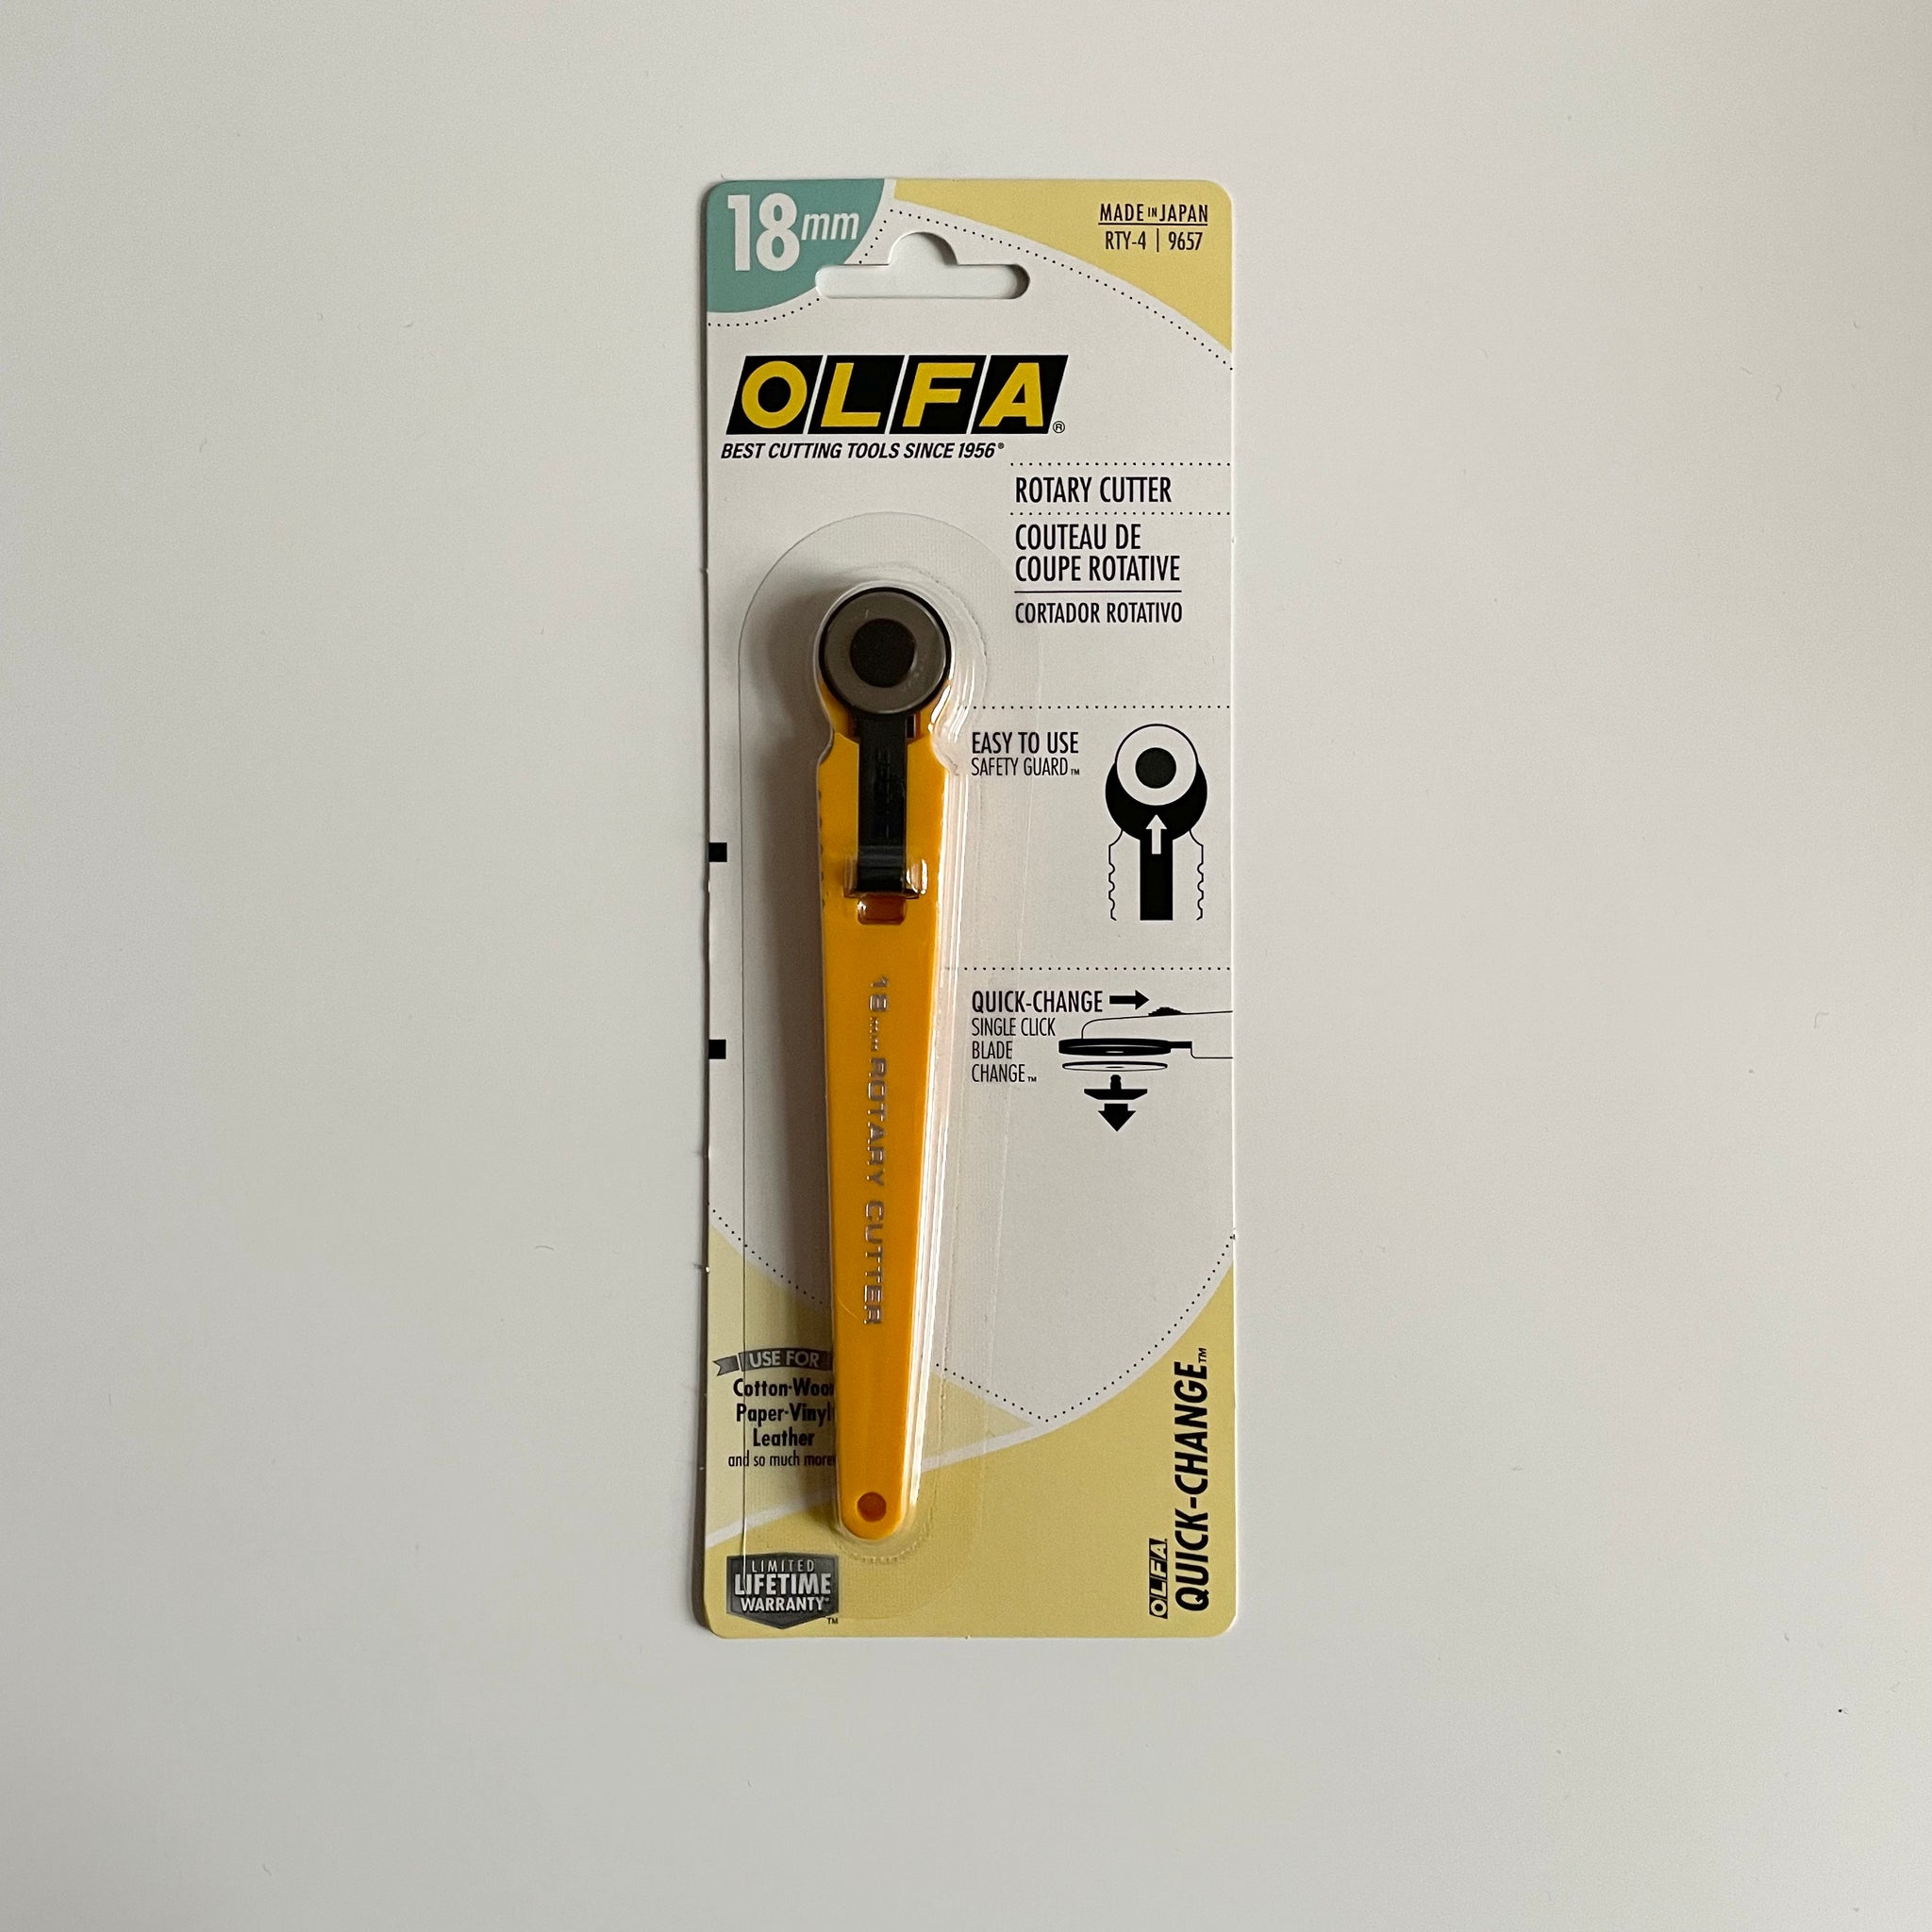 Olfa Rotary Cutter - 18 mm